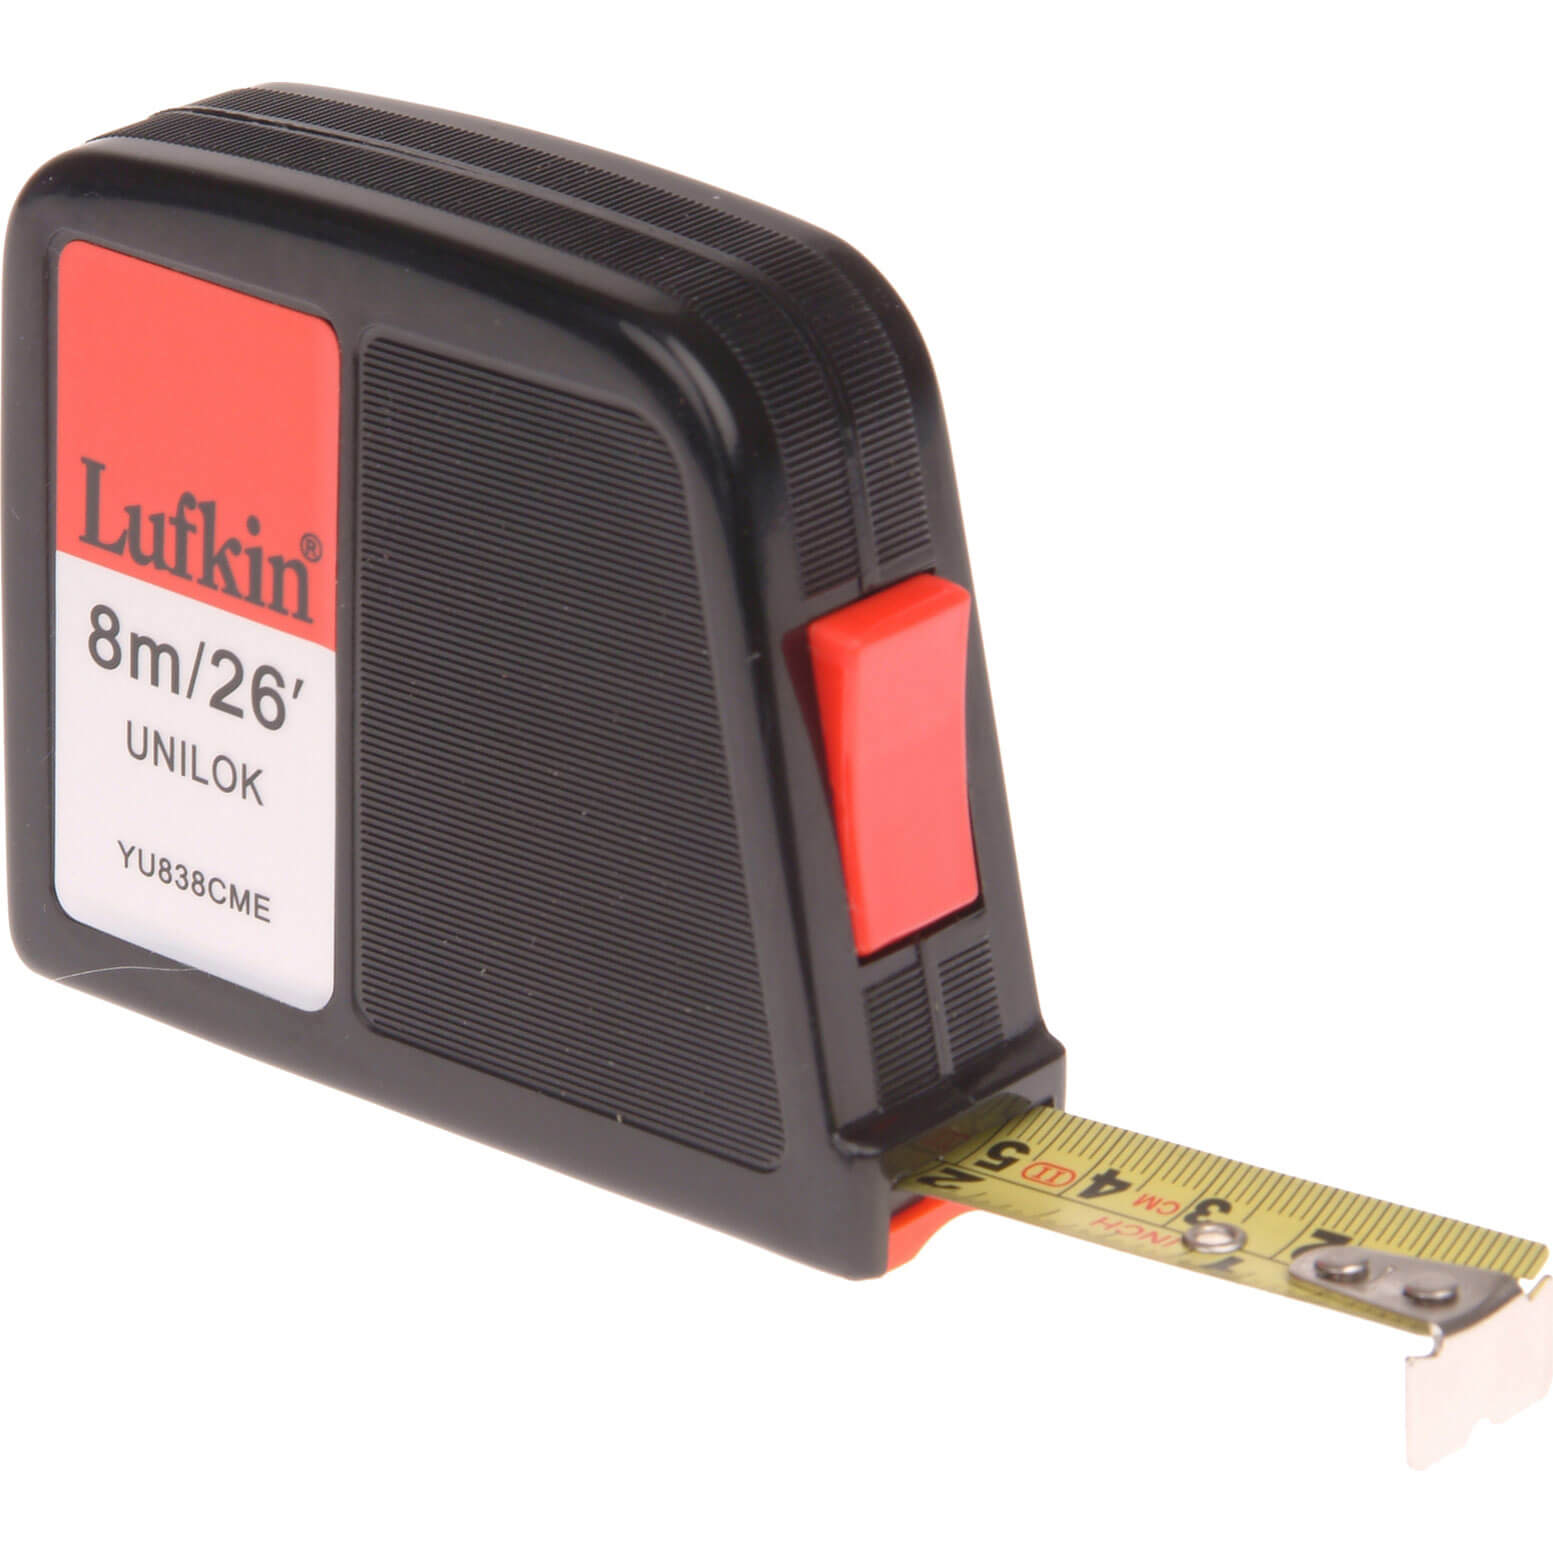 Photo of Lufkin Unilok Tape Measure Imperial & Metric 26ft / 8m 19mm